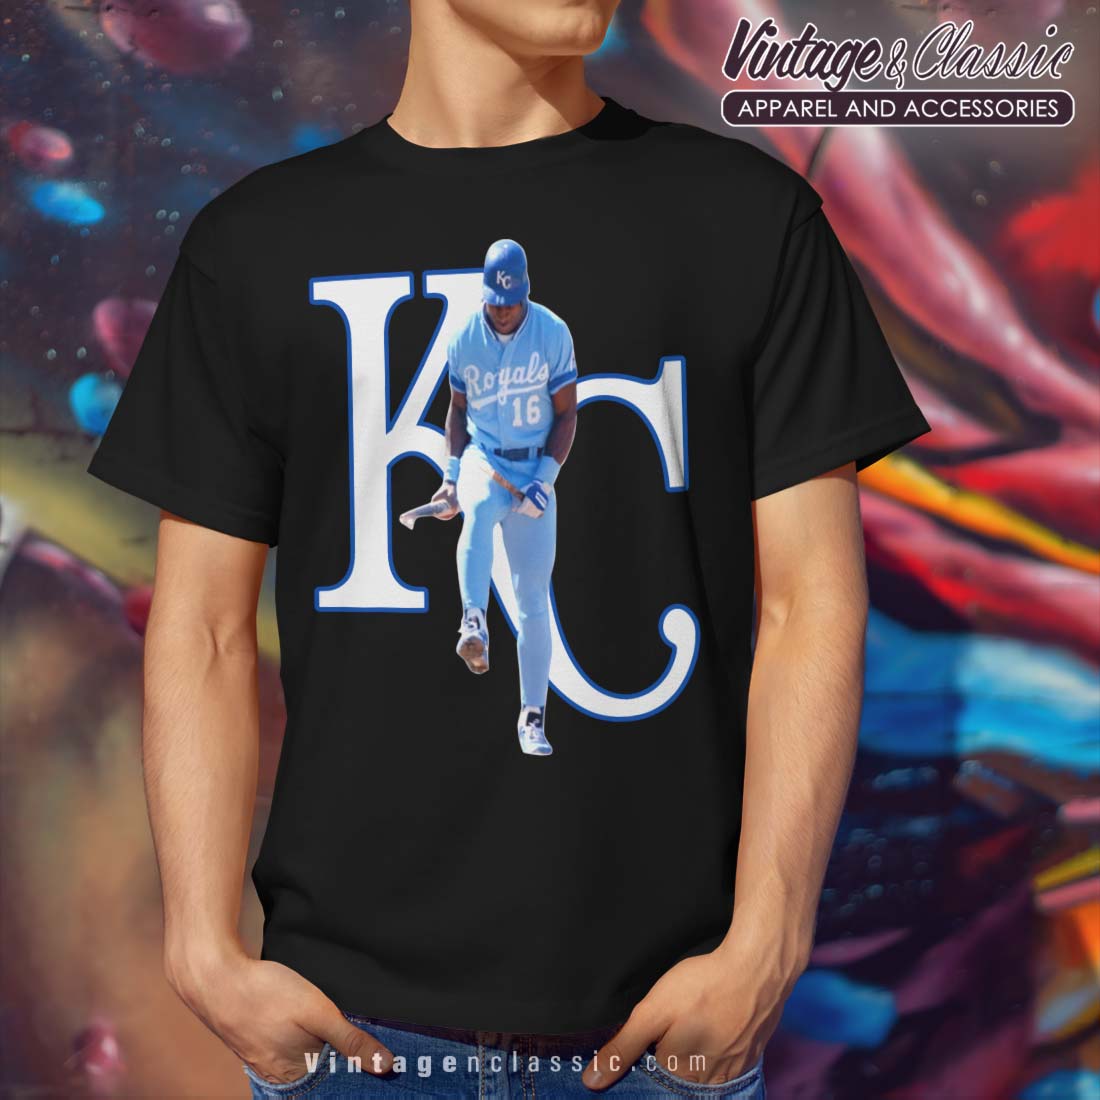 Nike Kansas City Royals Blue Color Bar Long Sleeve T Shirt